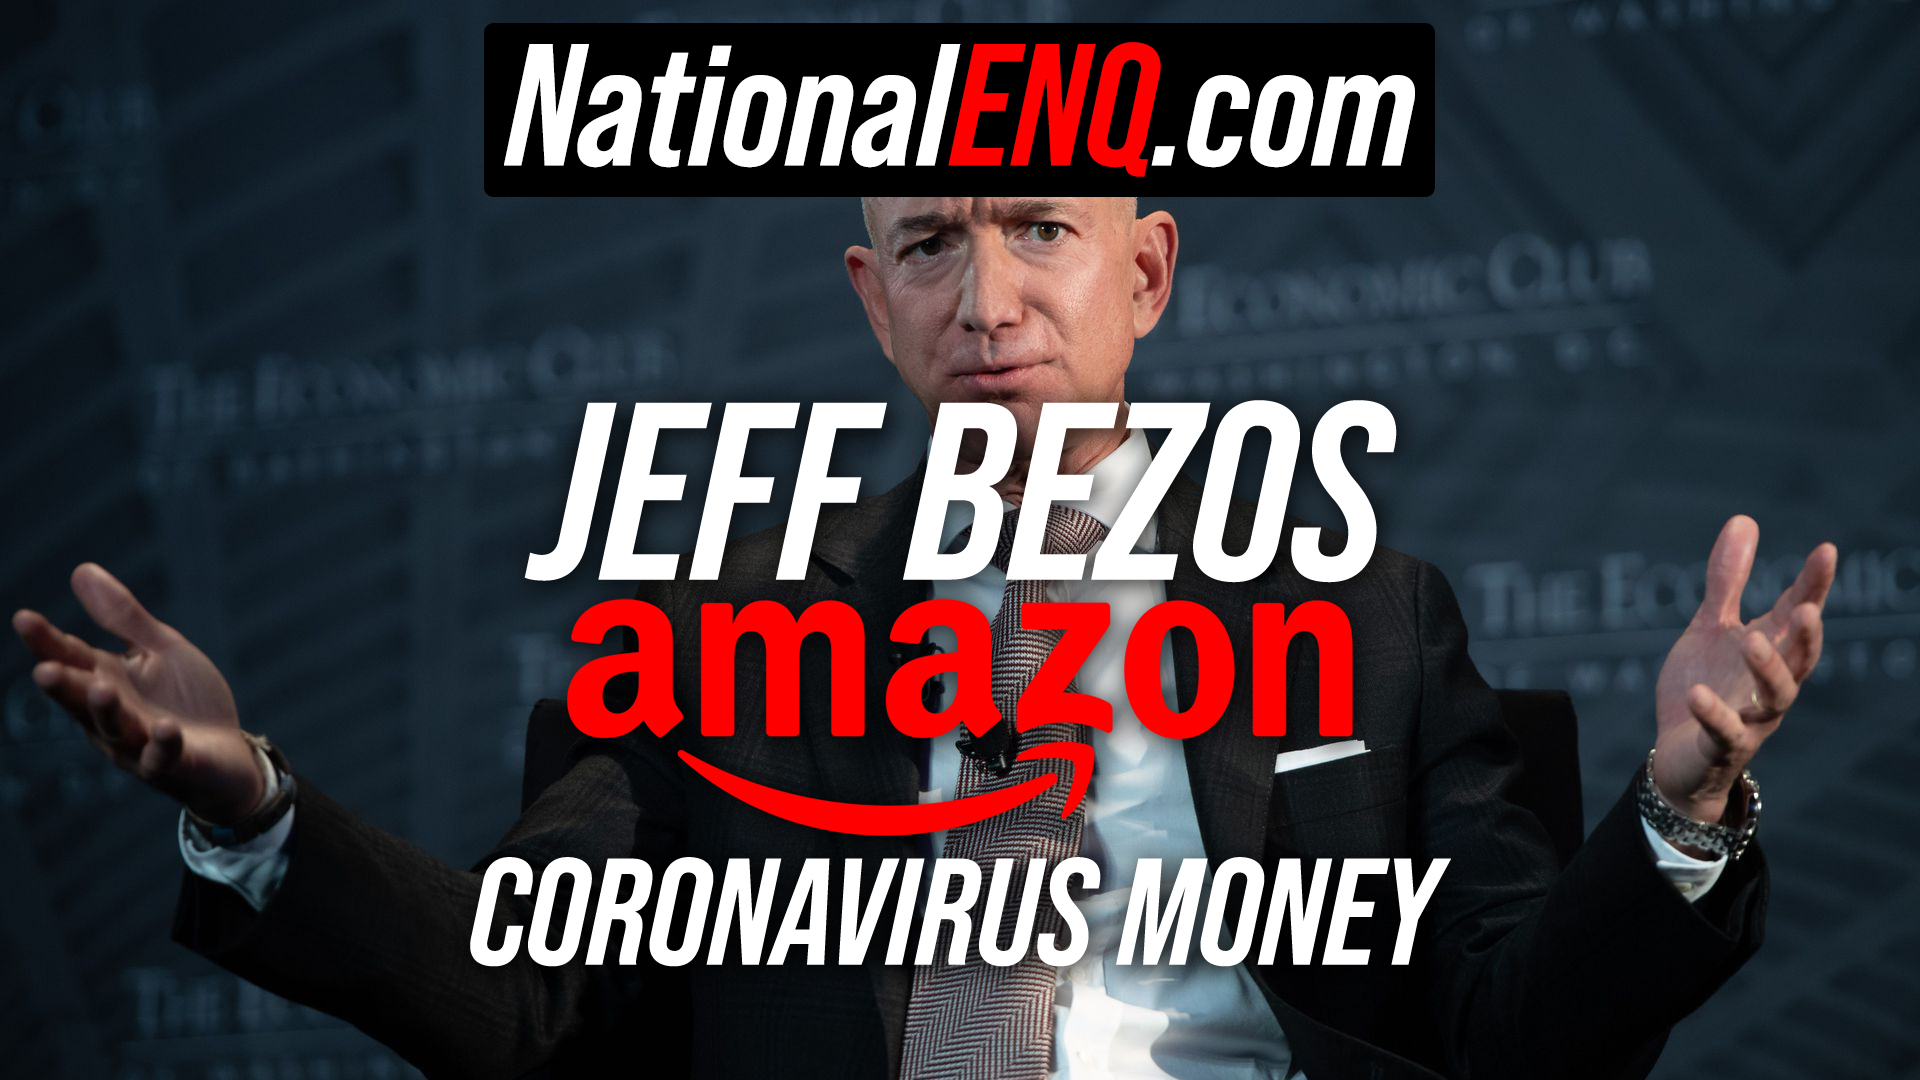 National ENQ Reports: Jeff Bezos & Amazon Cash in Big & Take Unfair Advantage of Coronavirus (COVID-19) Pandemic